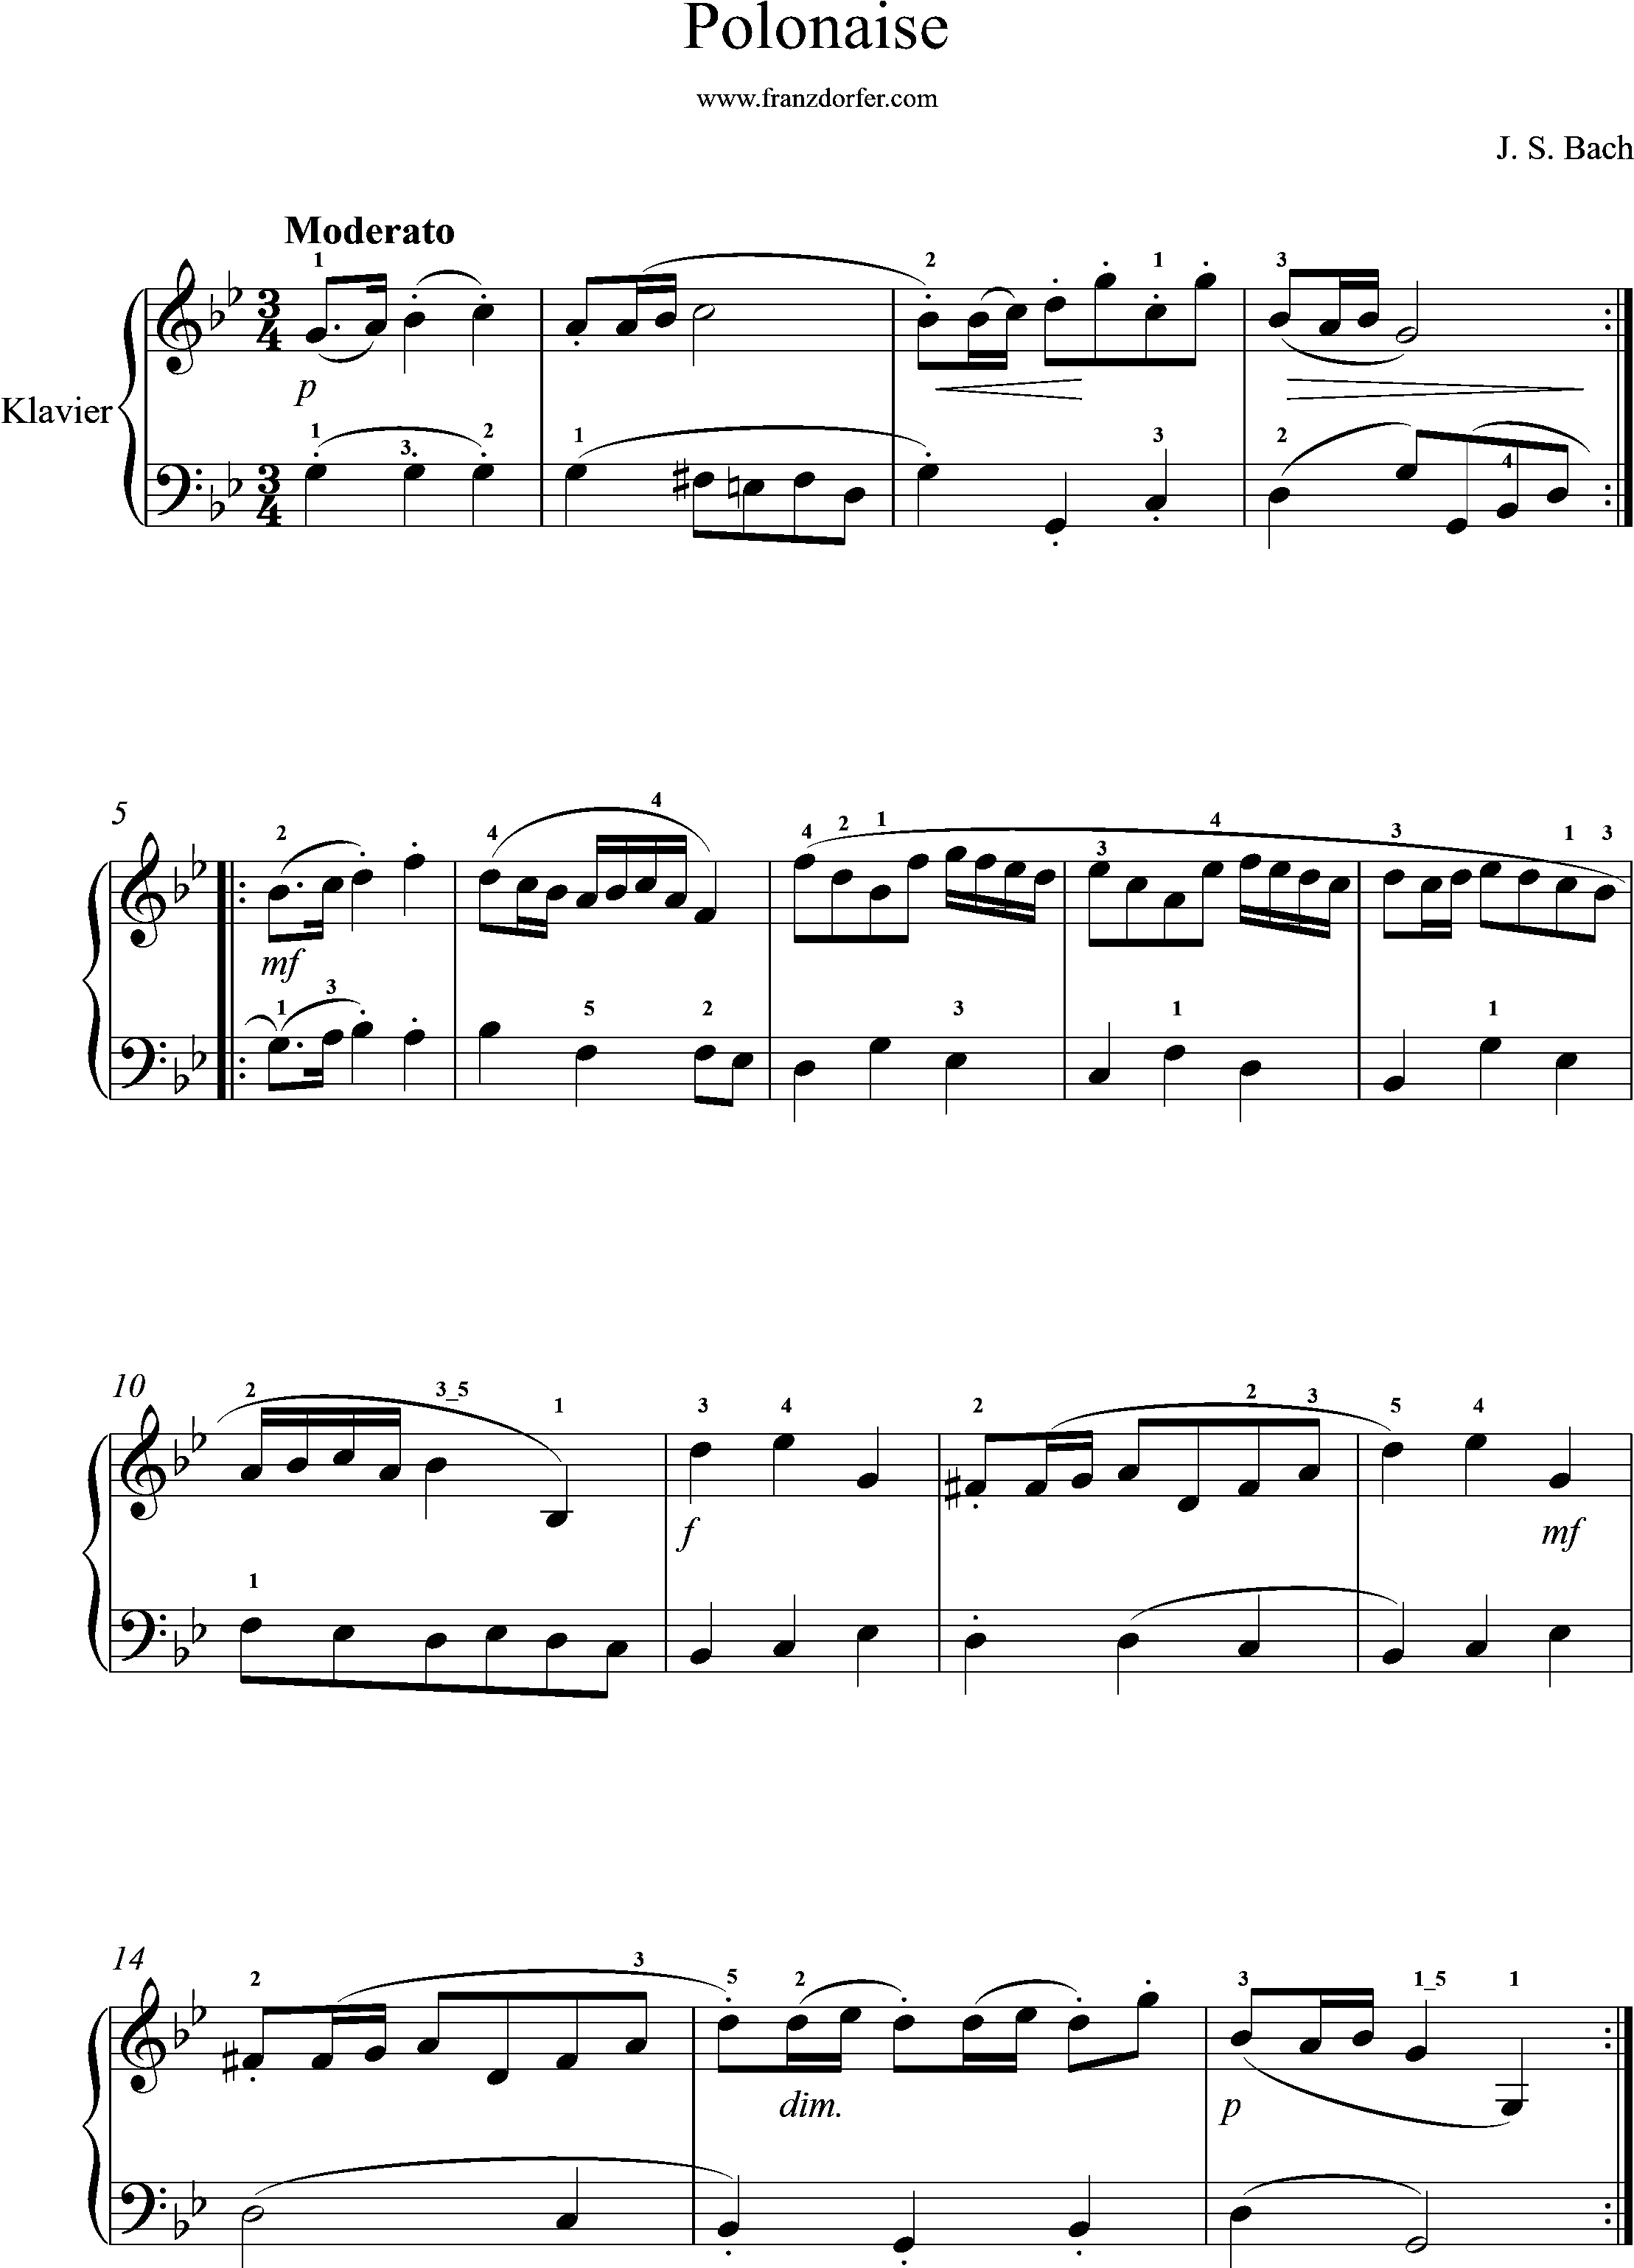 klaviernoten - Polonaise in g, Bach